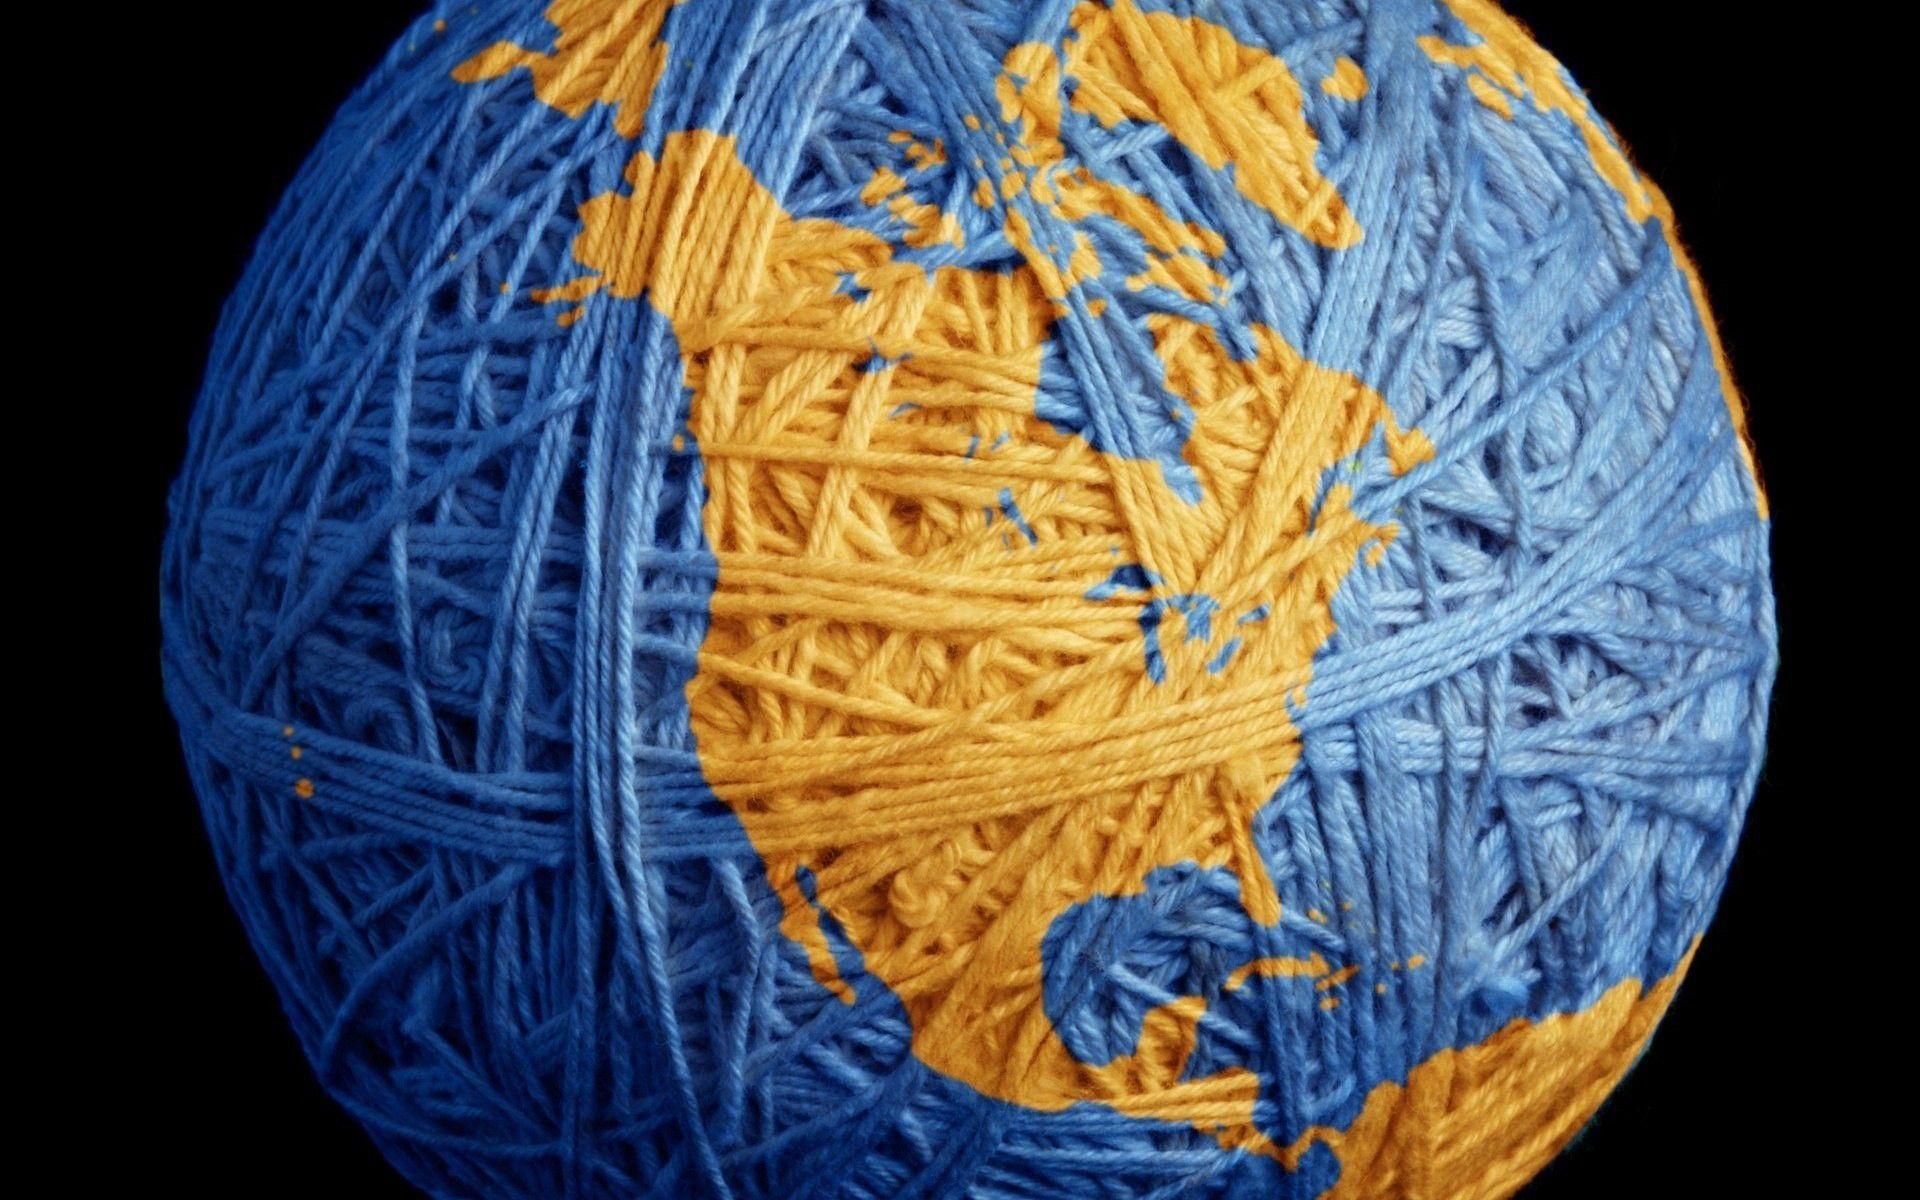 Download Wallpaper earth planet ball america tangle yarn